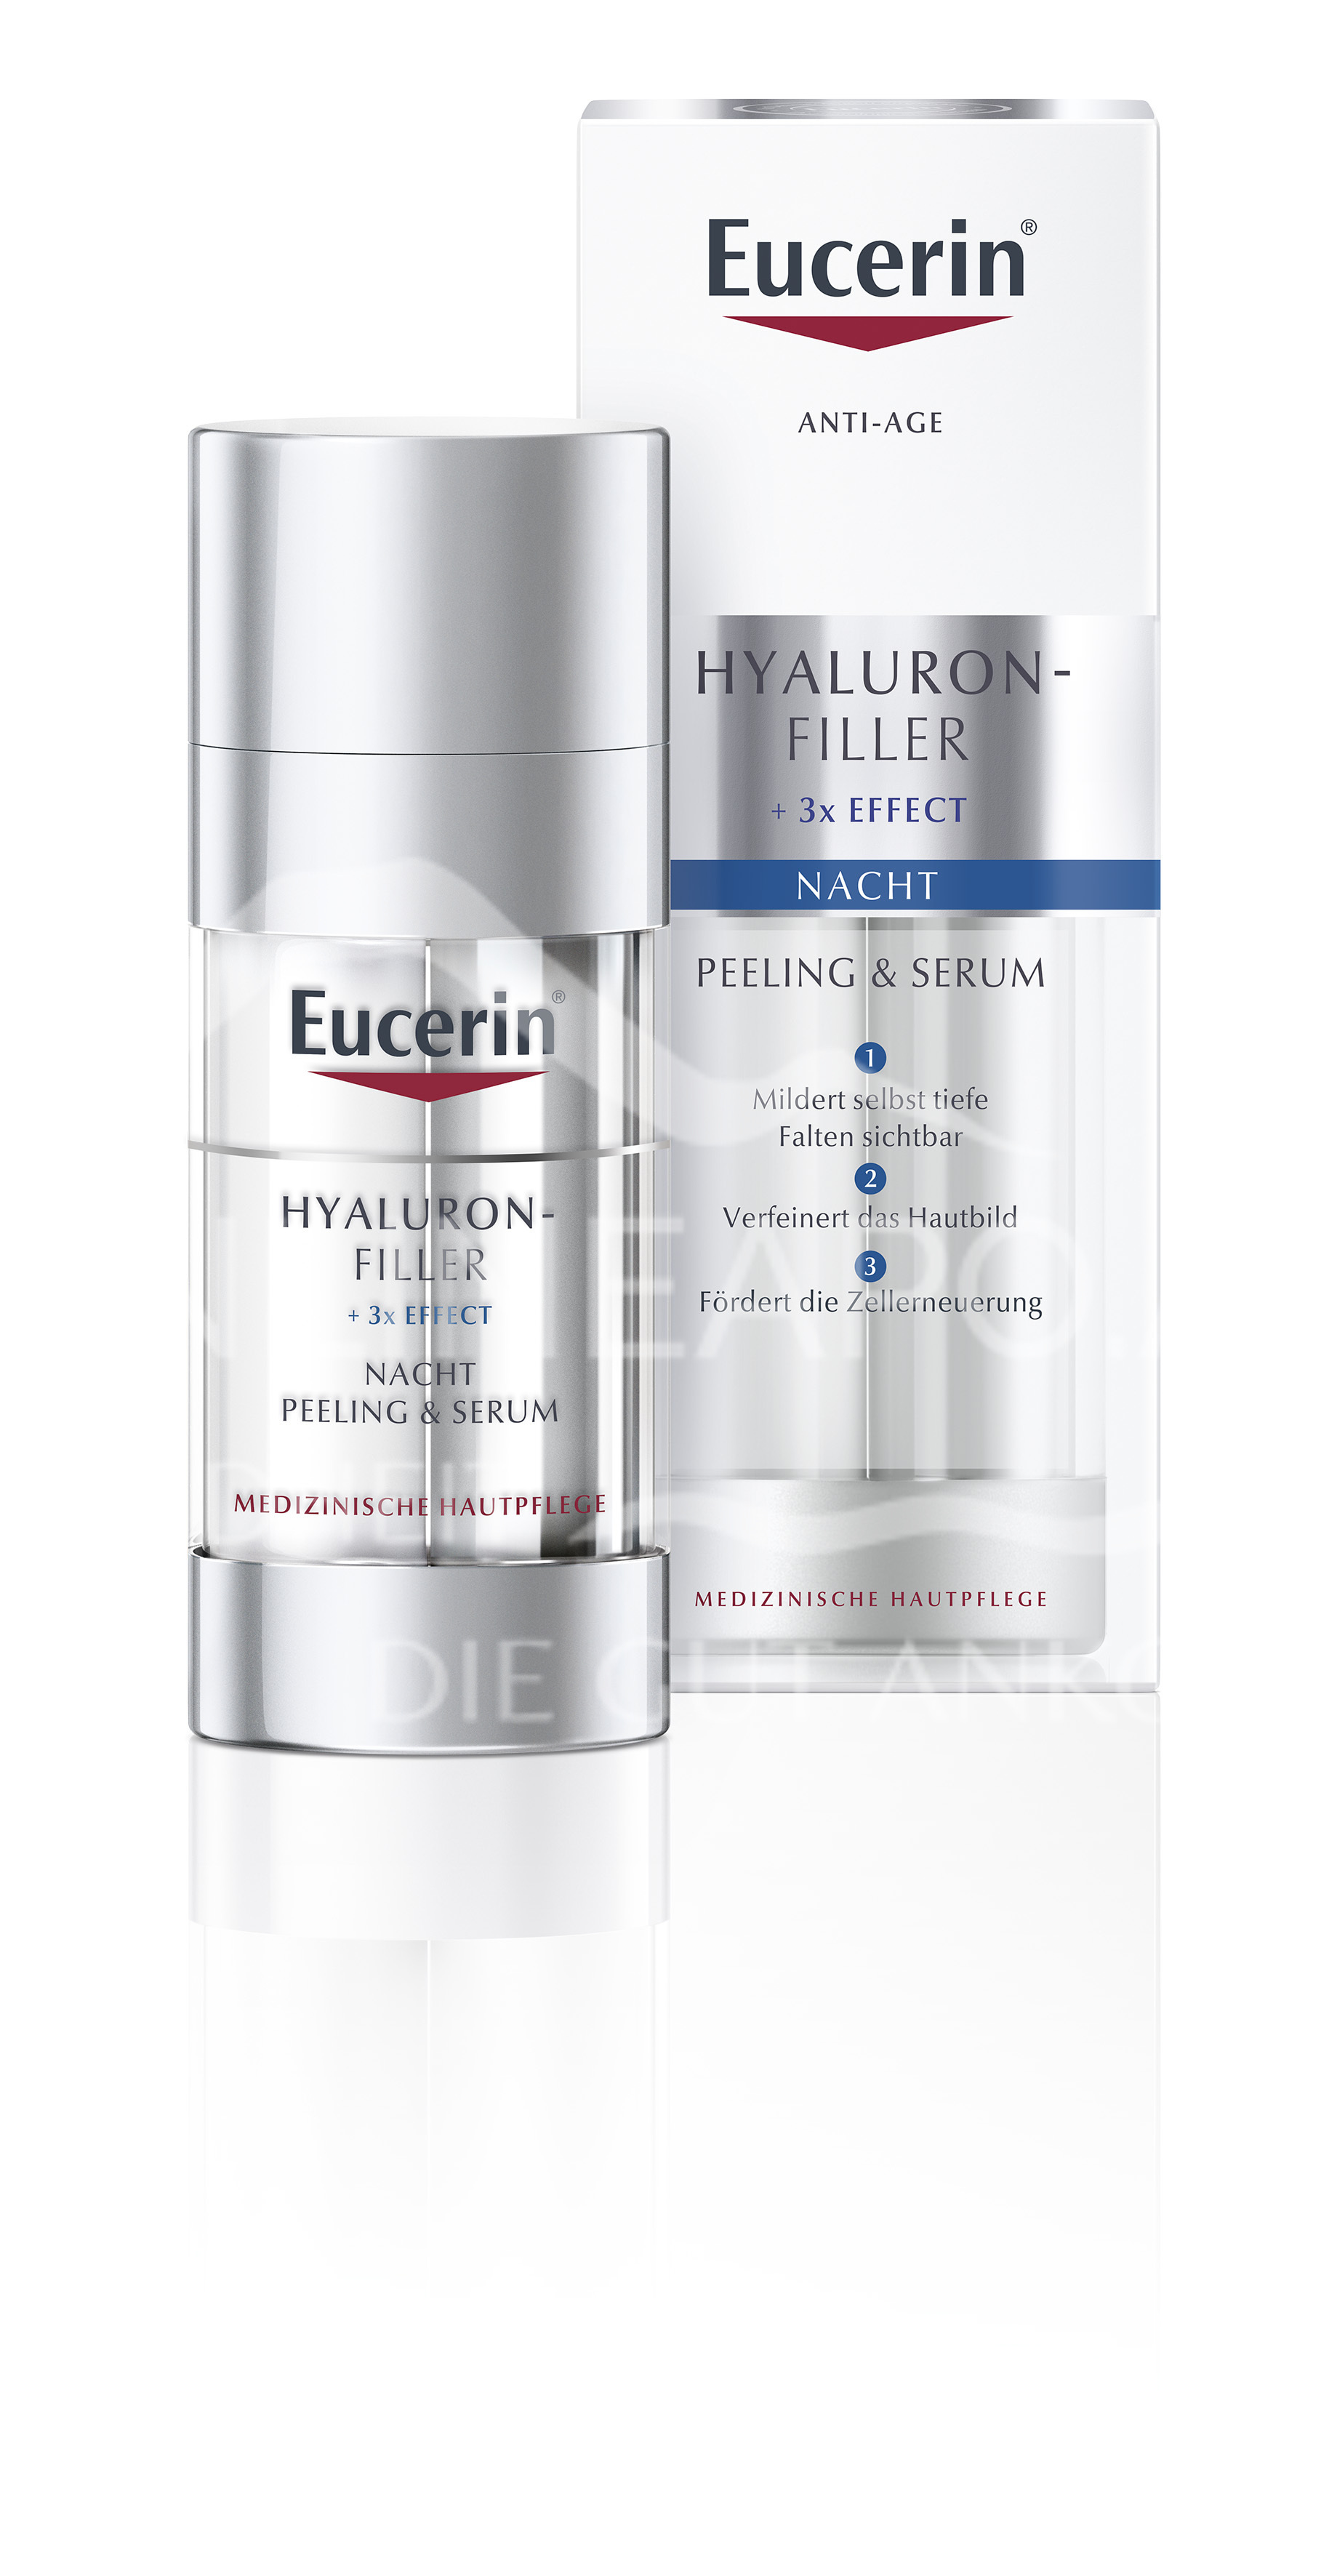 Eucerin® HYALURON-FILLER Nacht-Peeling & Serum